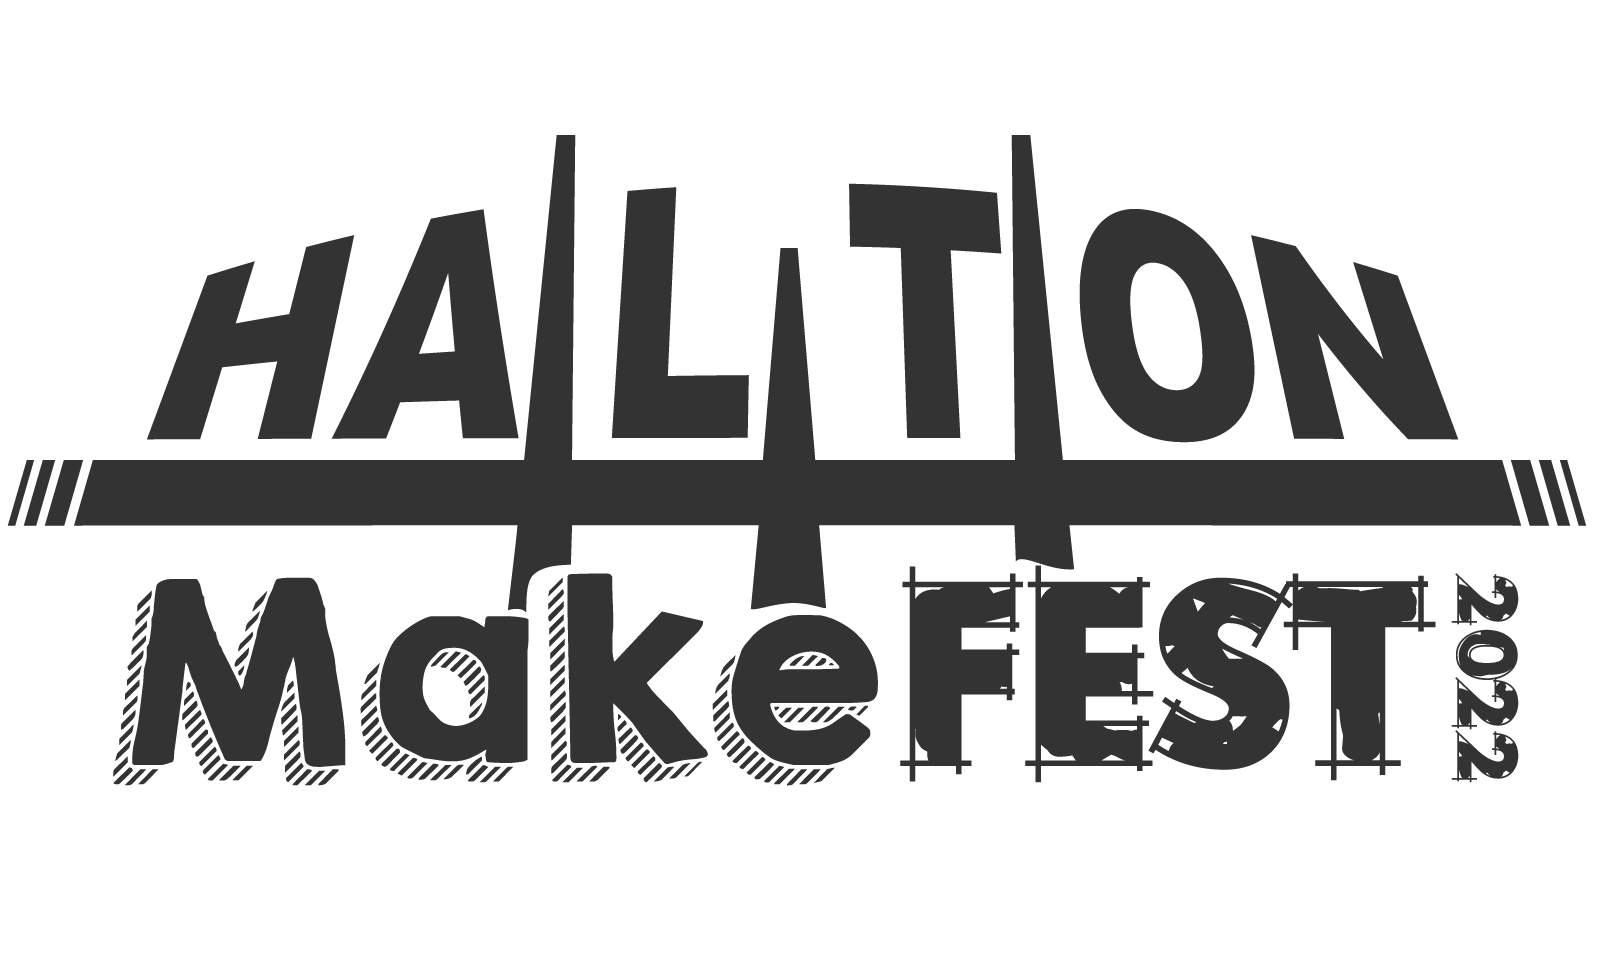 Halton MakeFest